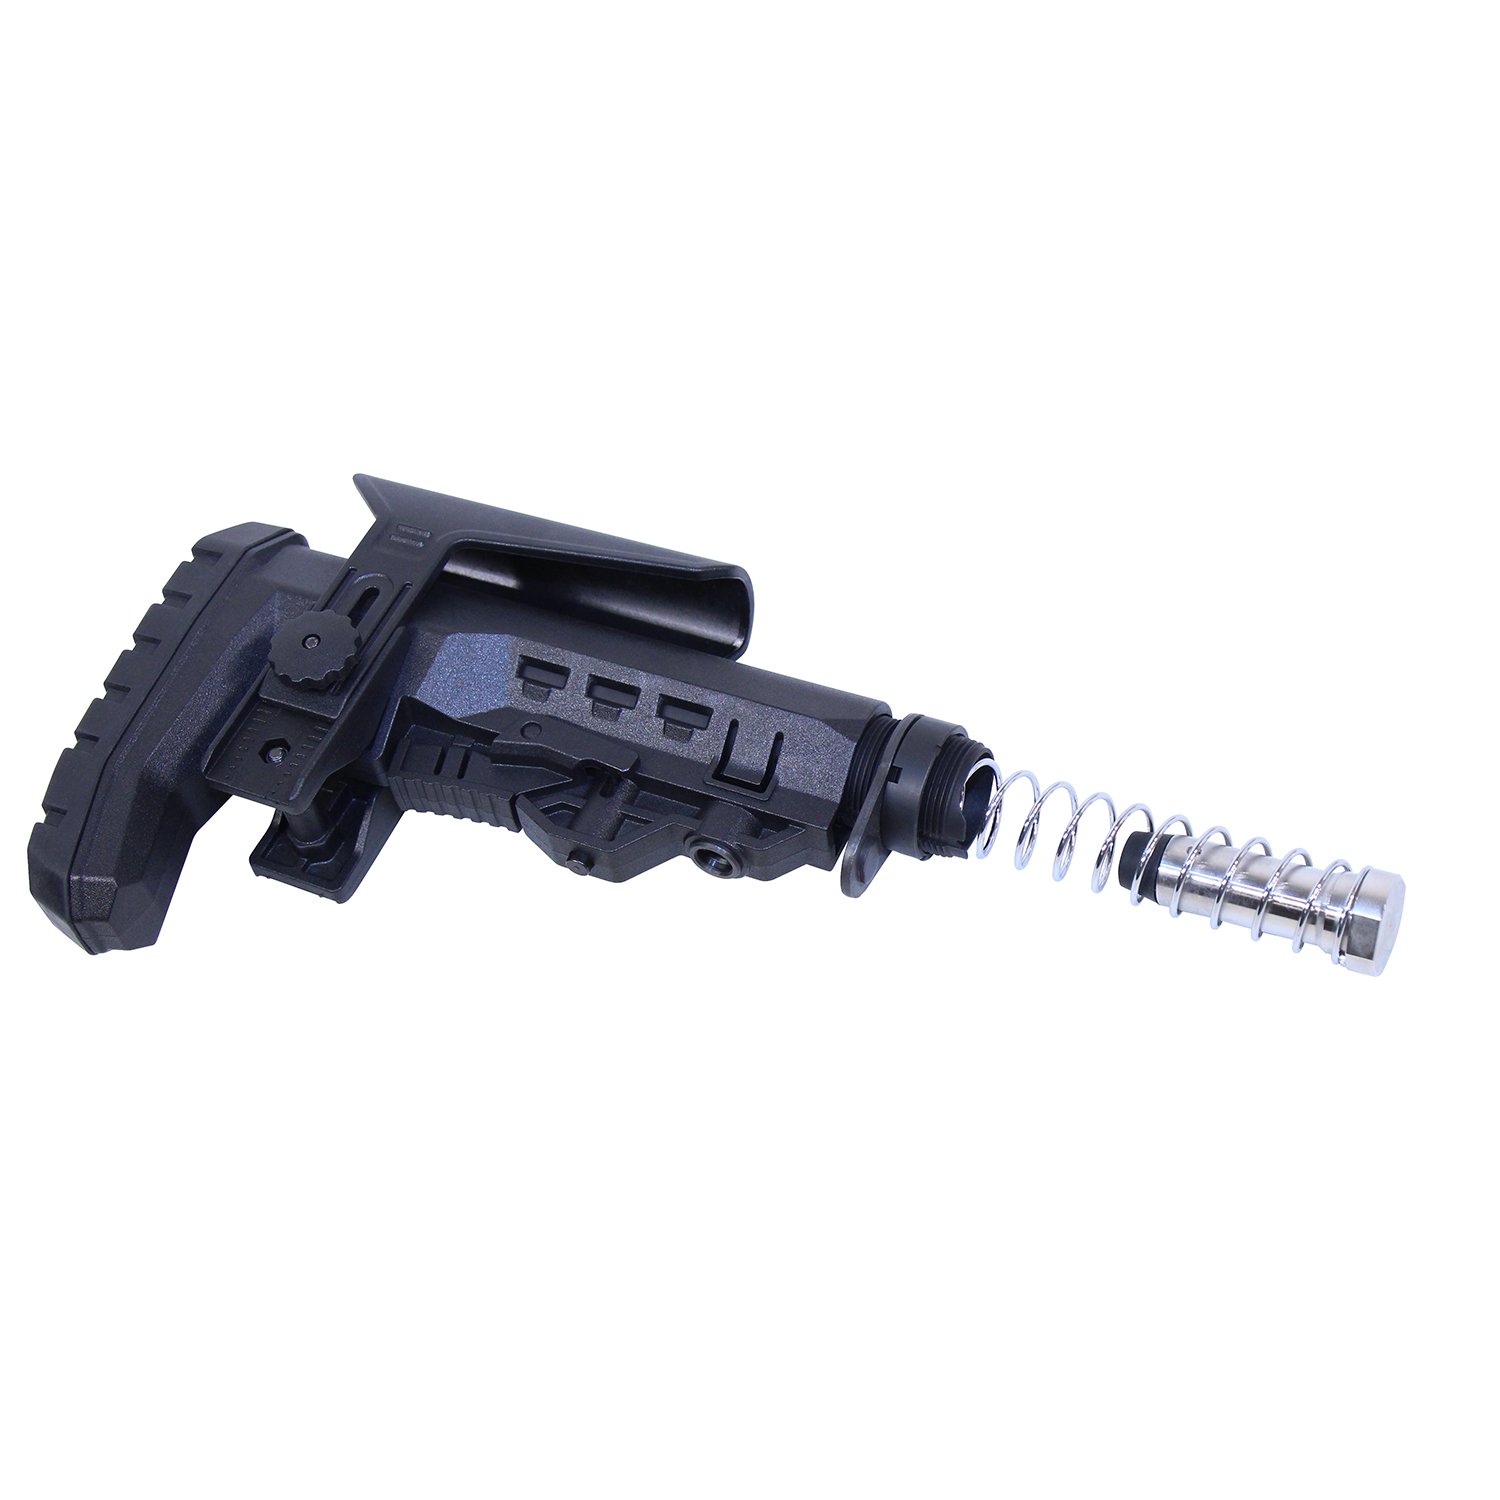 AR-308 Multi Point Modular Stock with Adjustable Cheek Riser